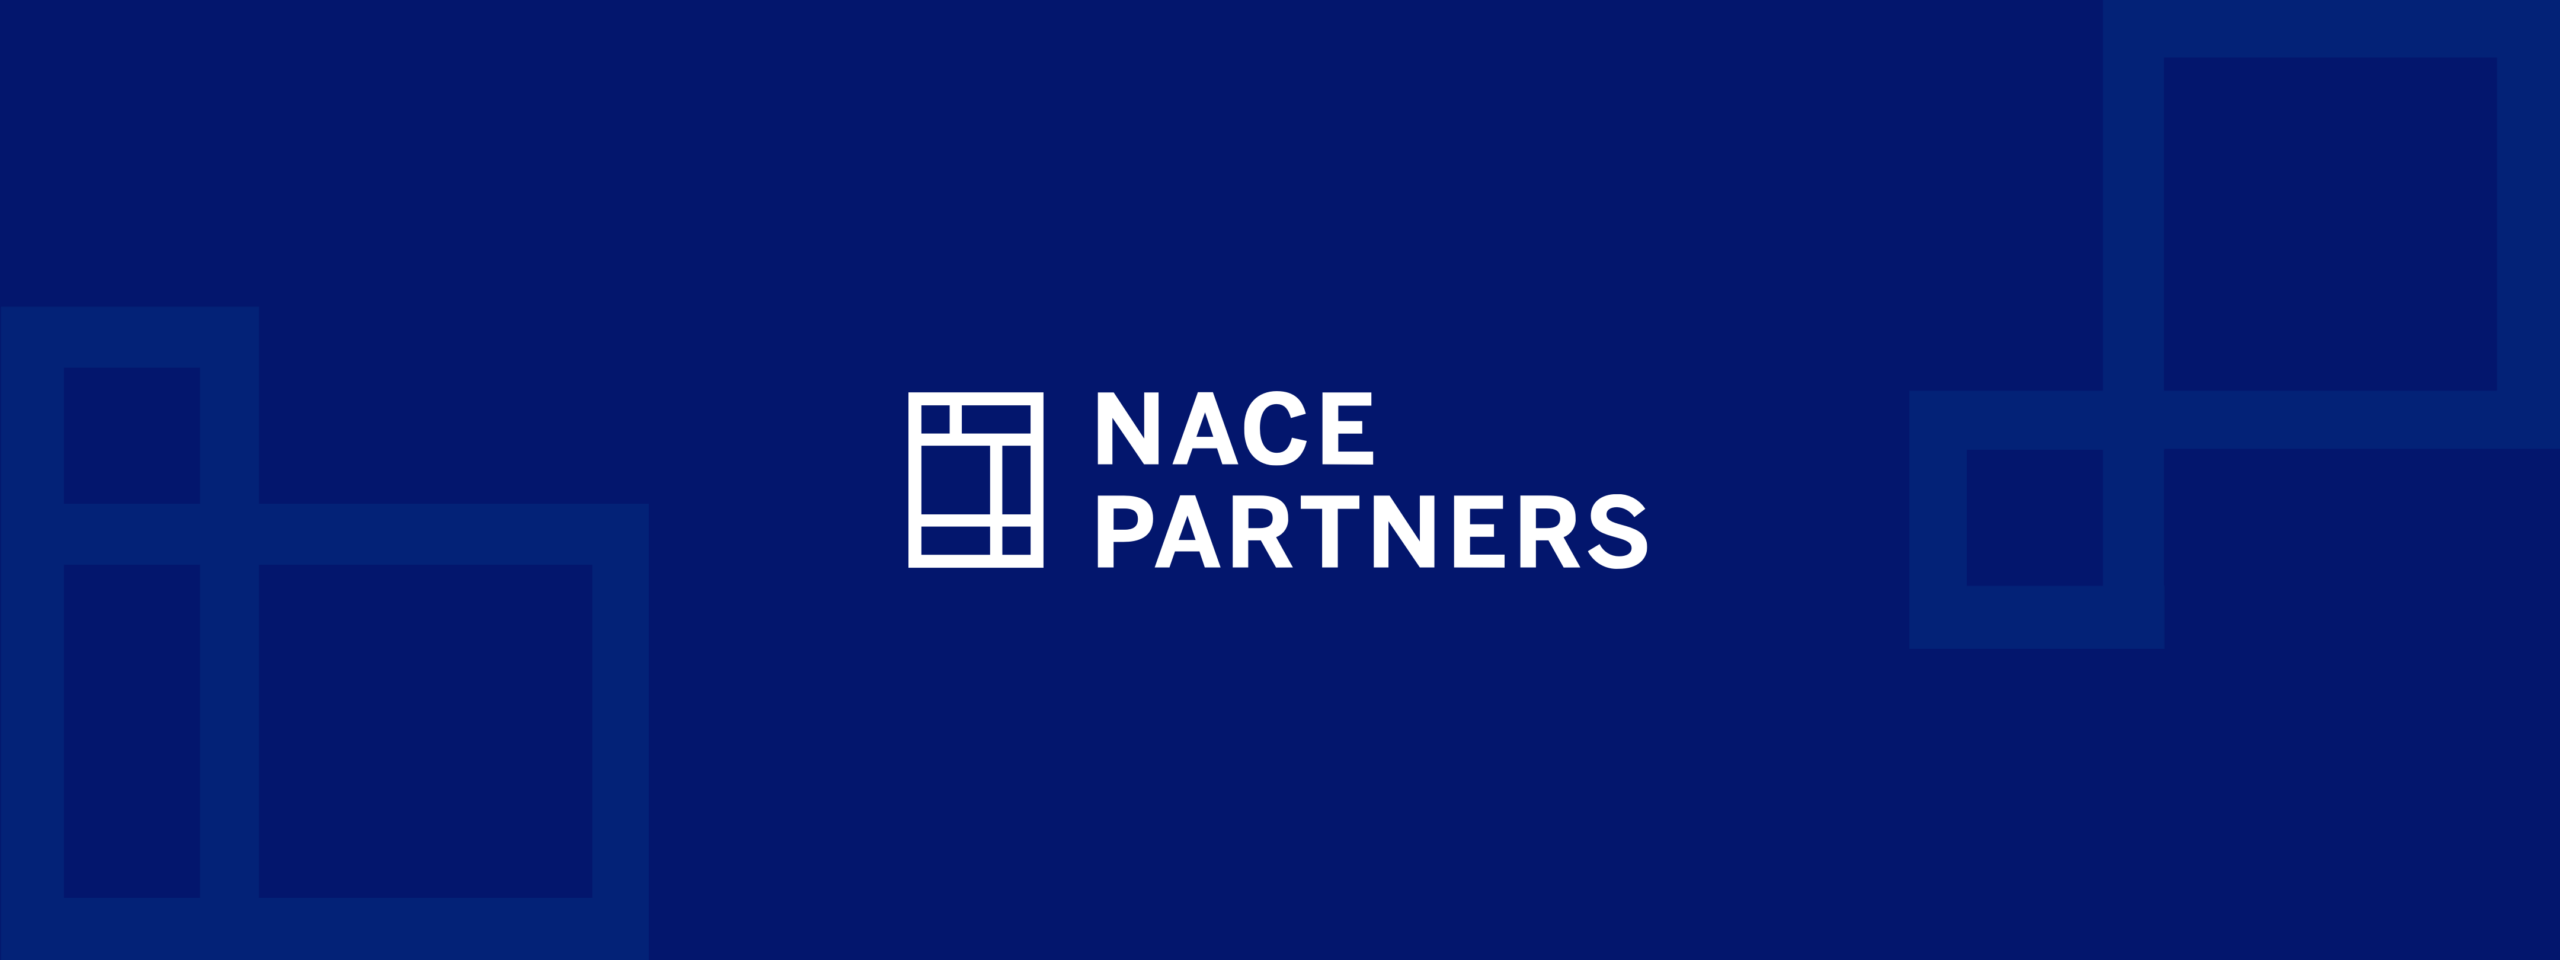 Nace Partners Logo and Watermarks